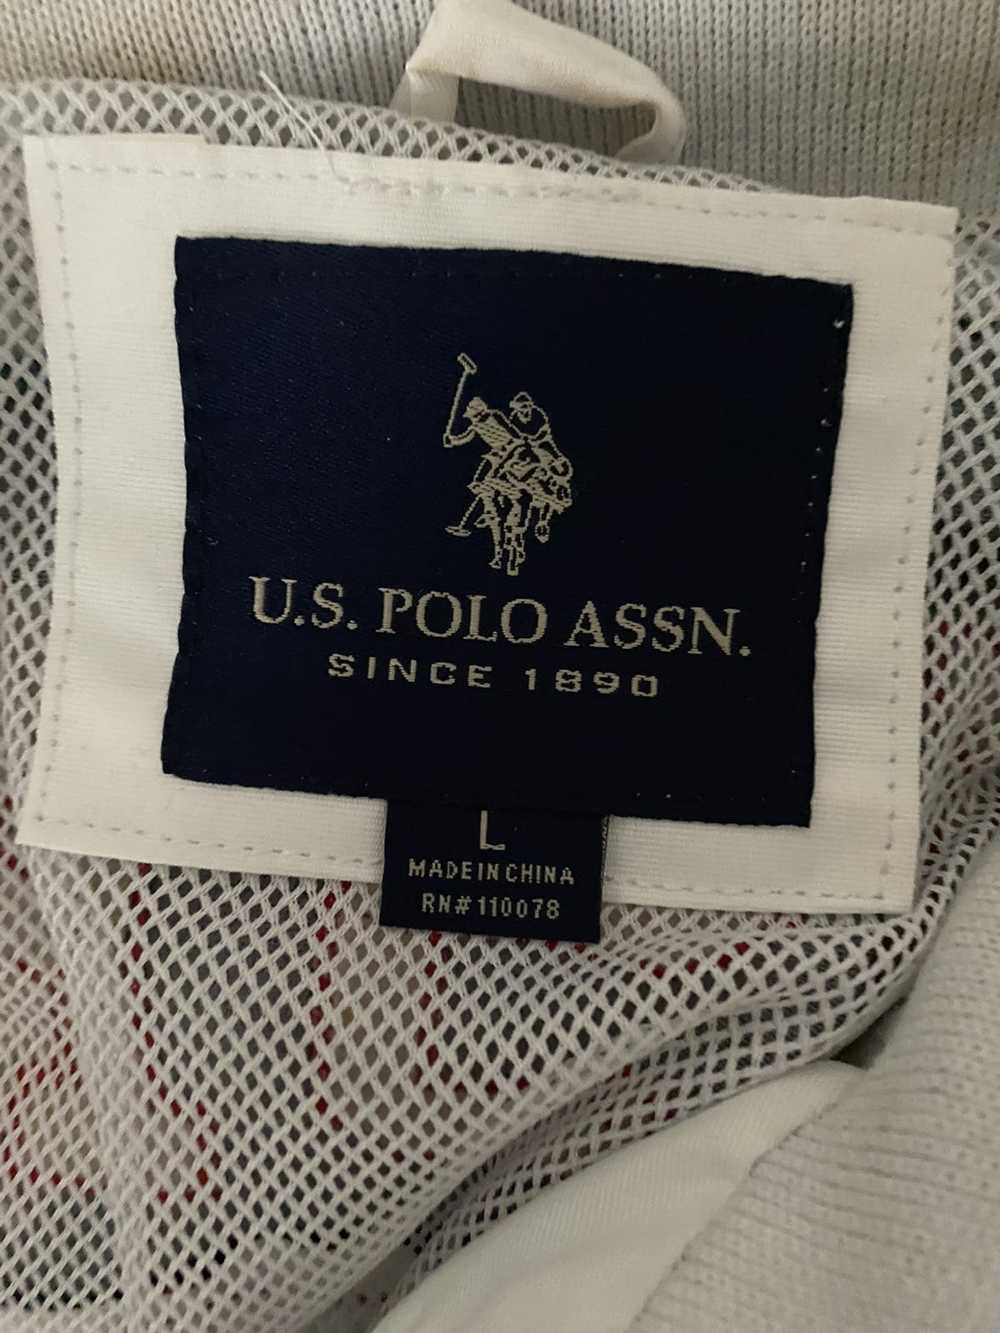 Сорочка marc o polo розмір s m оригінал, Antigua Houston Astros Spark Polo